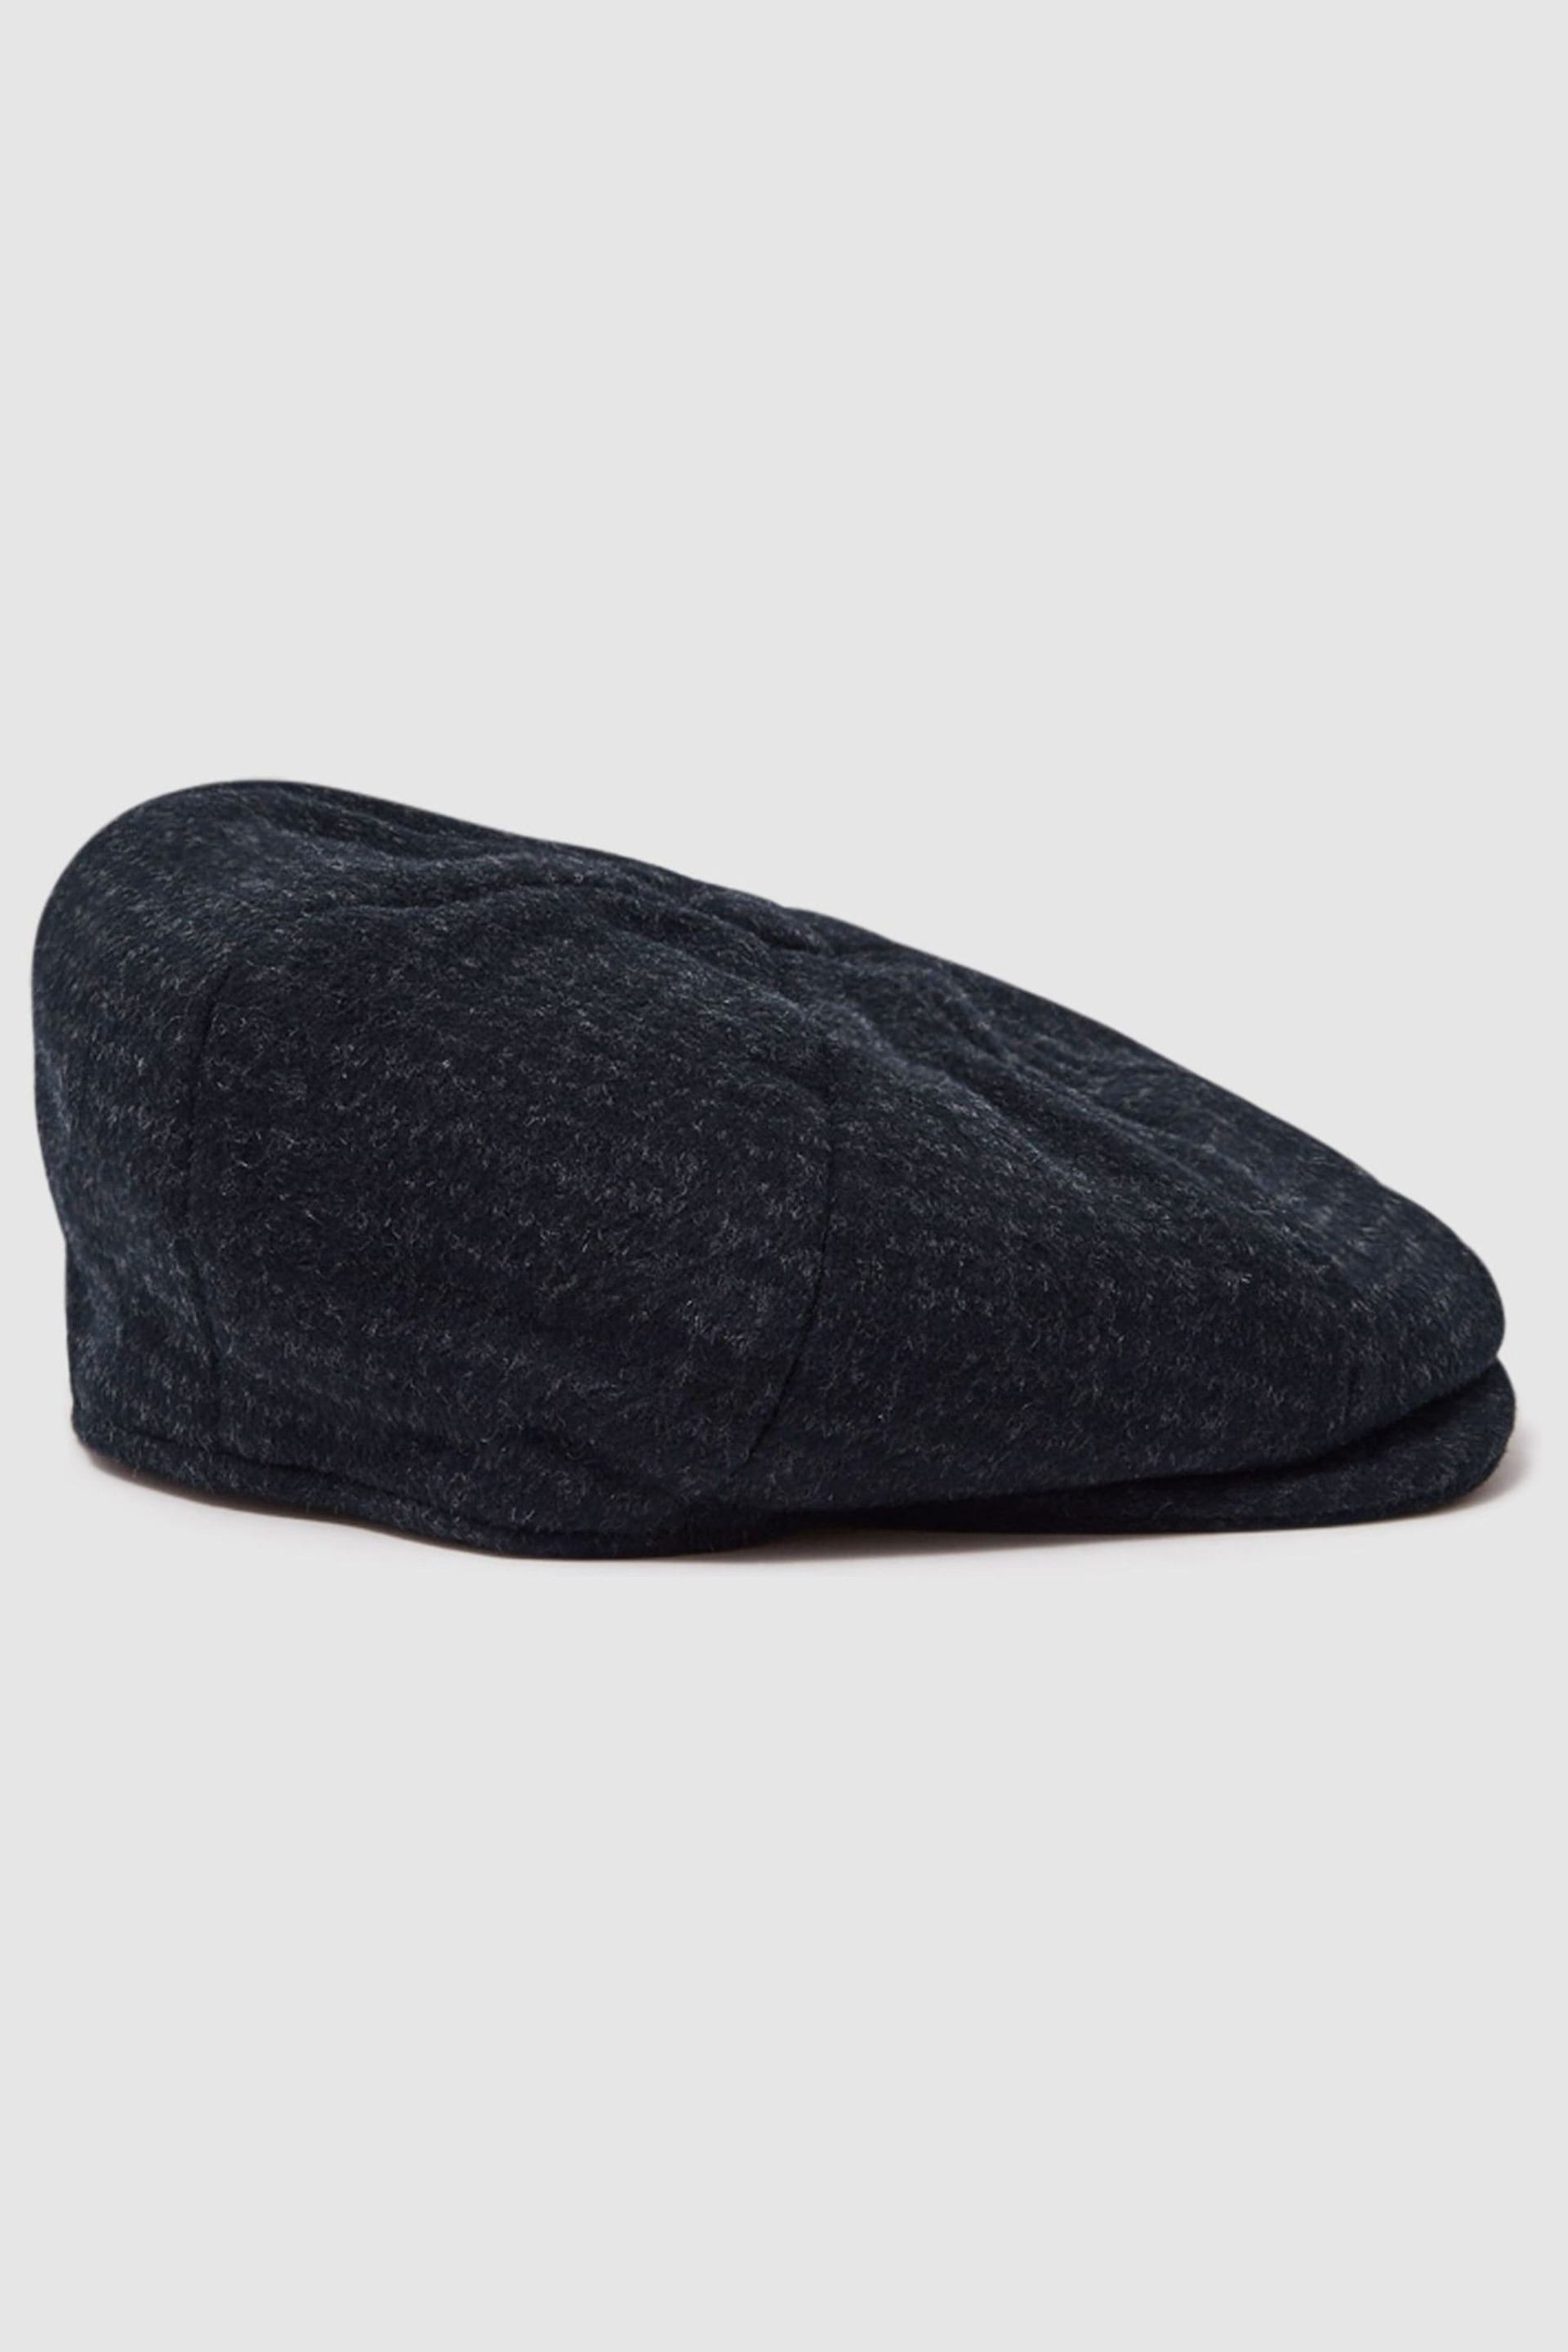 Reiss Navy Arbor Wool Blend Baker Boy Cap - Image 1 of 4